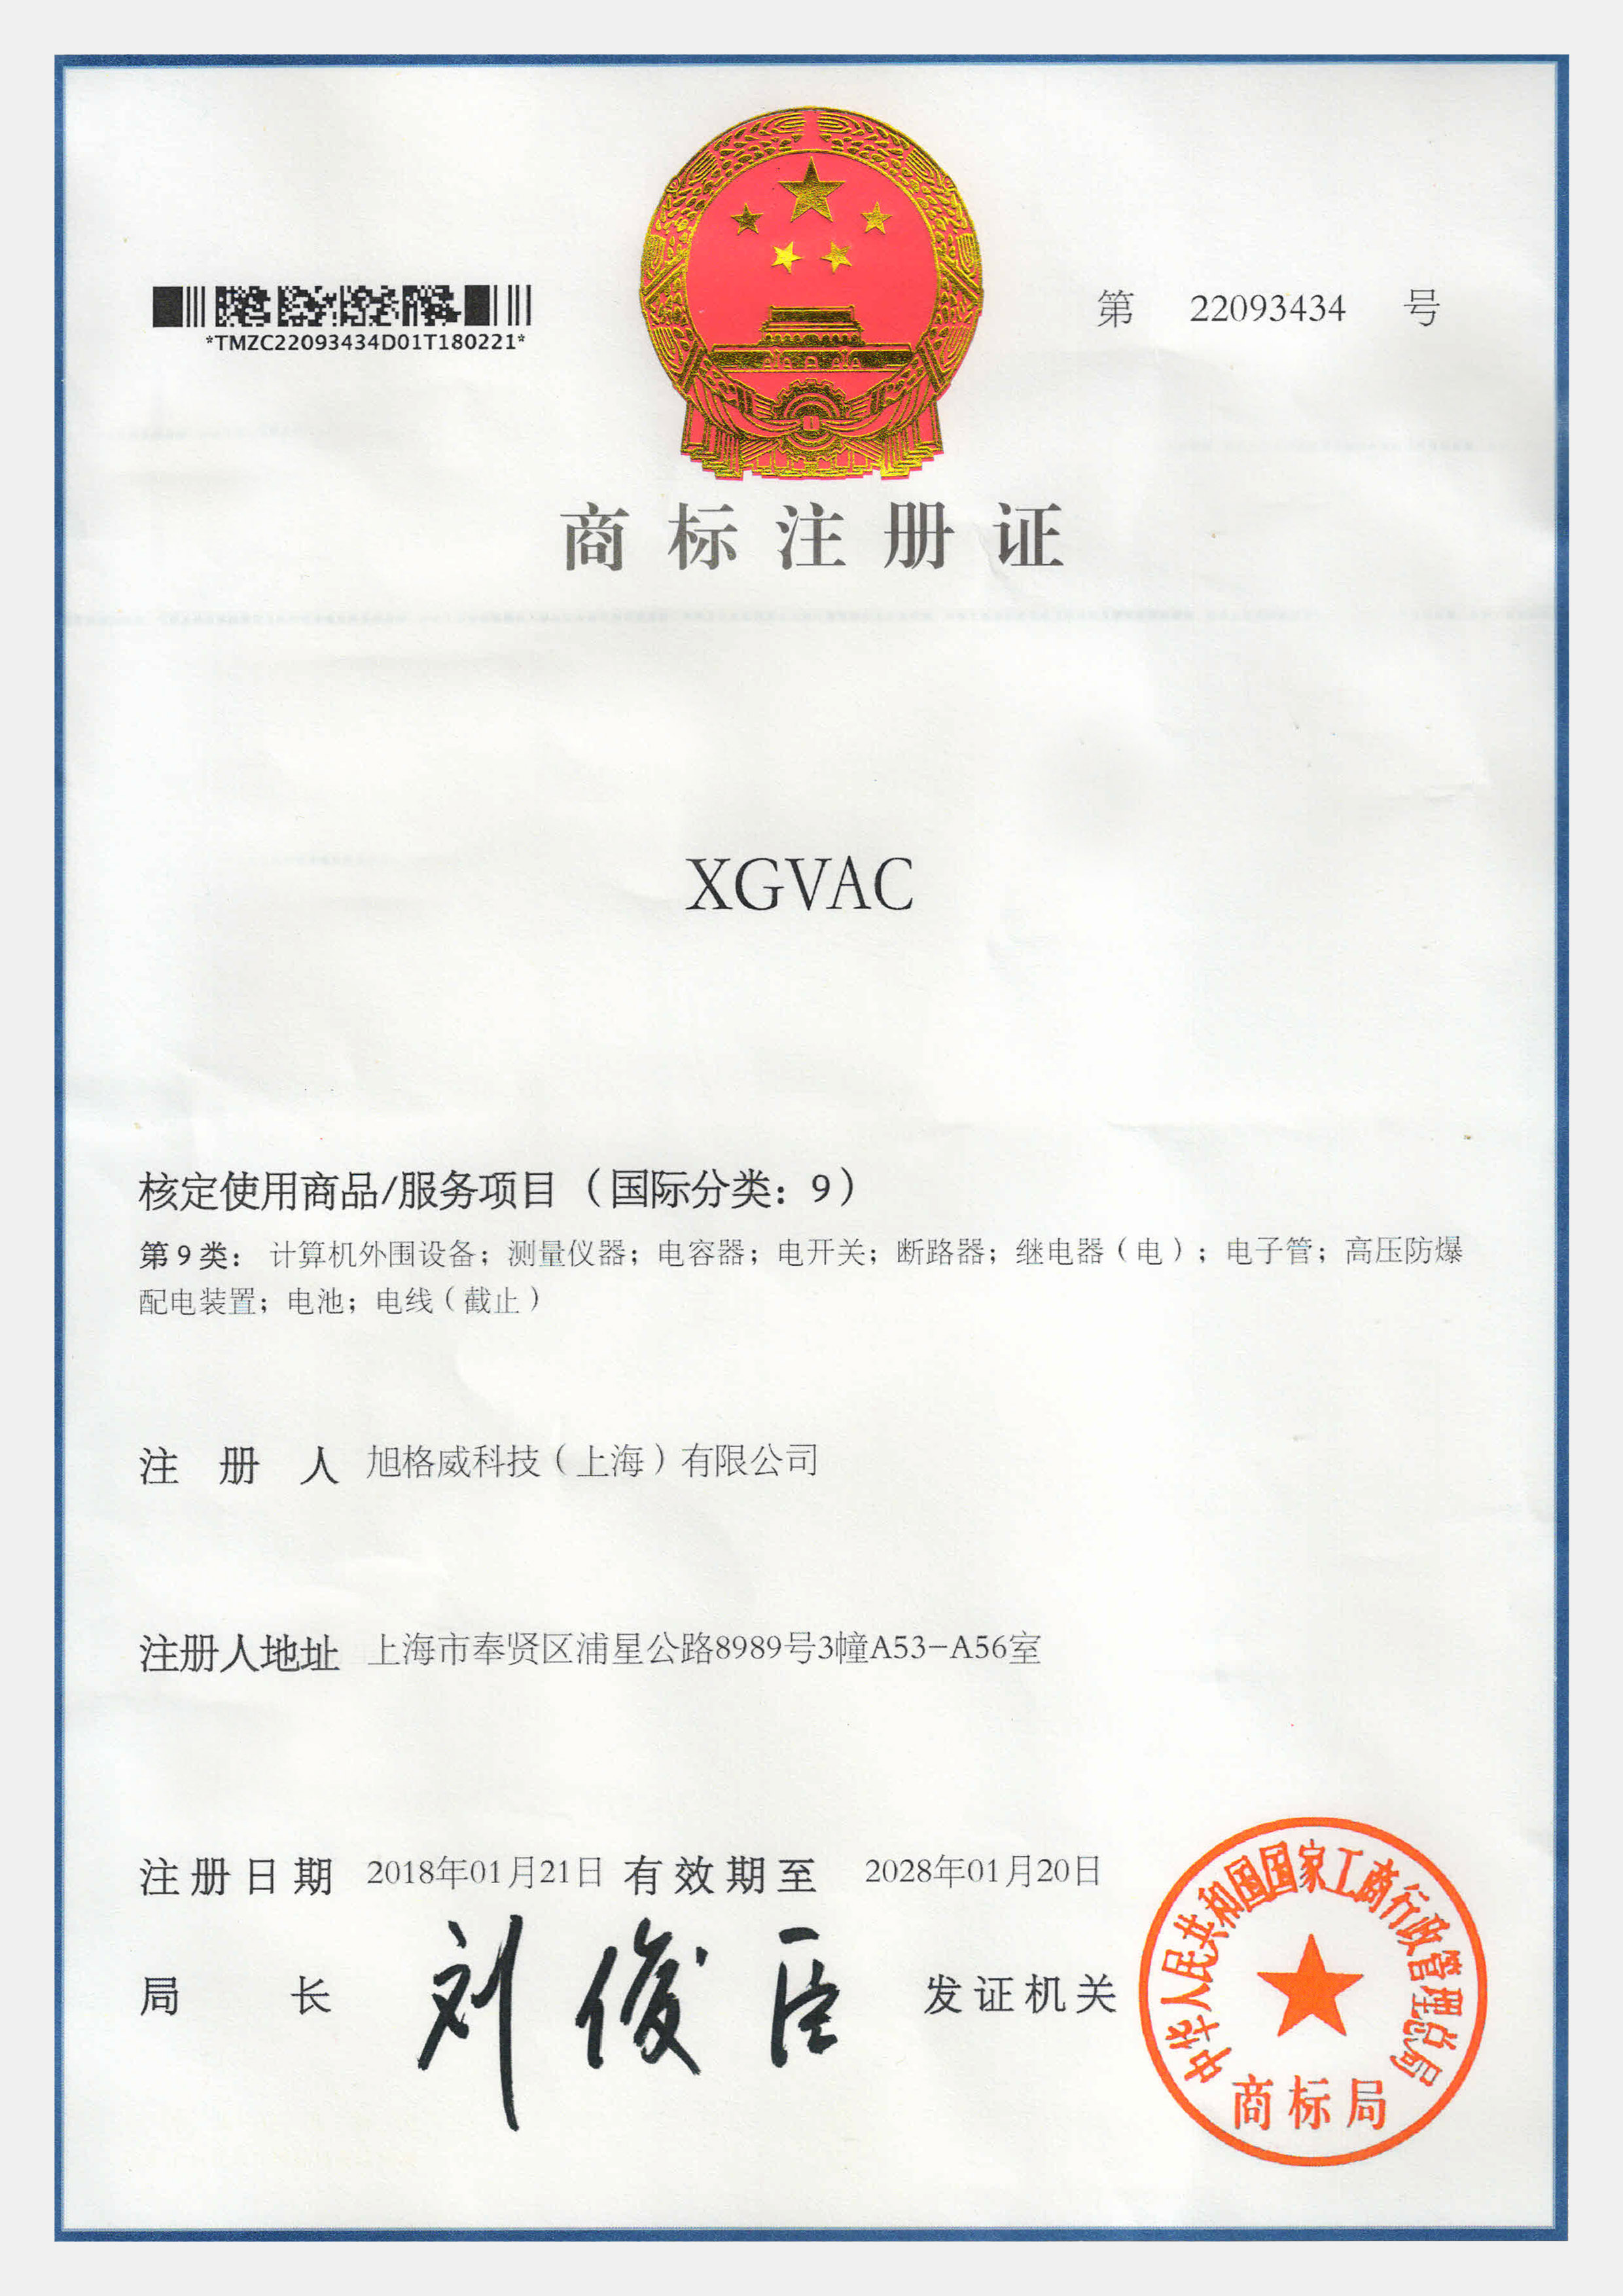 XGVAC trademark registration certificate